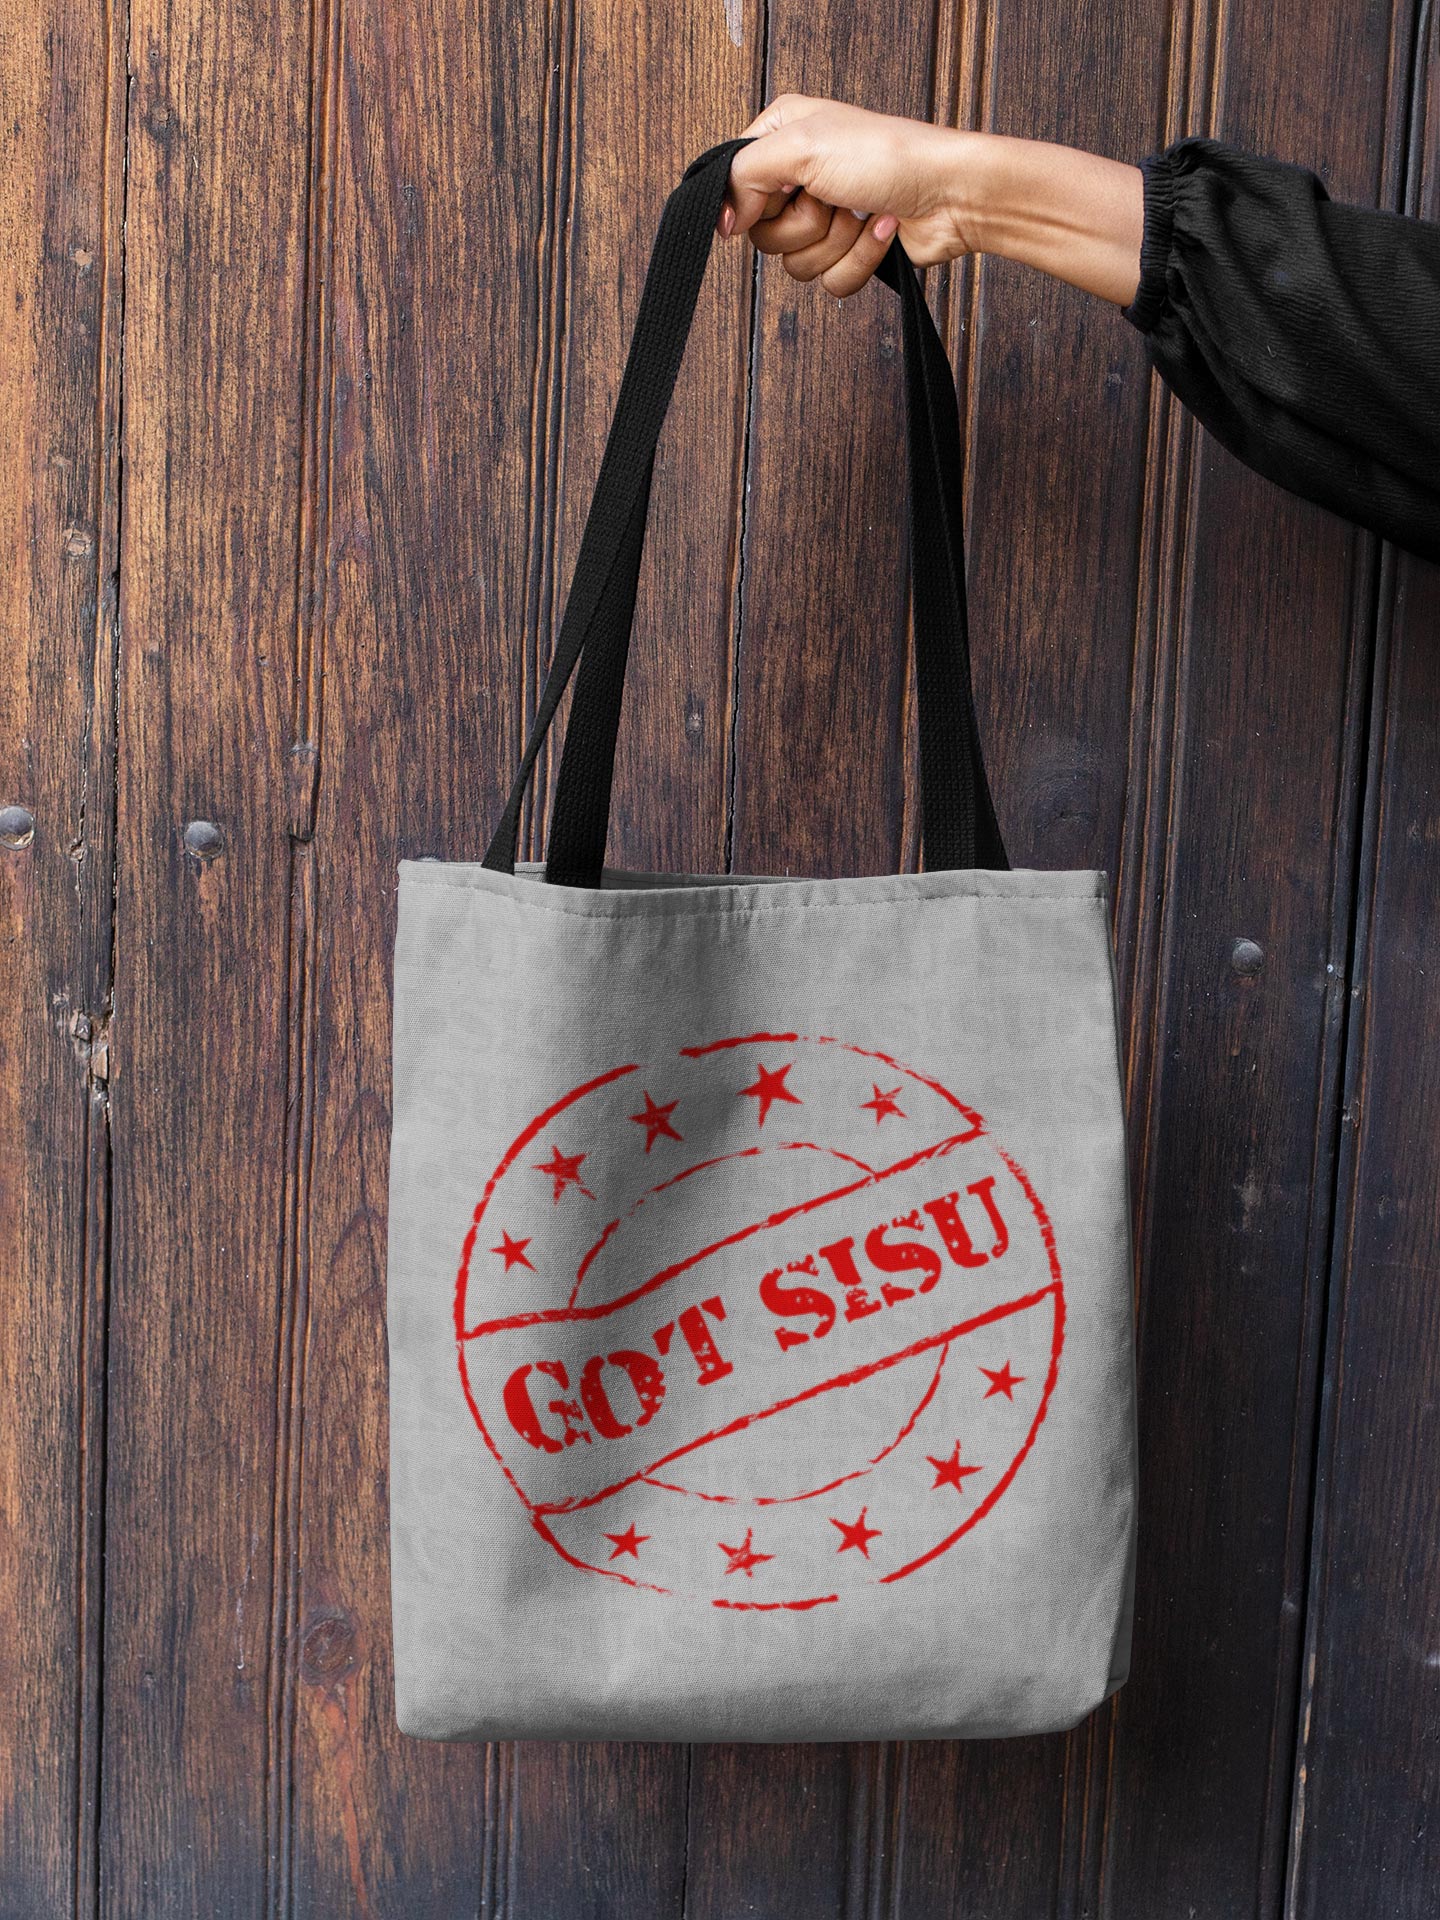 Sisu Tote Bag for Finnish Yoopers | Got Sisu Stamp